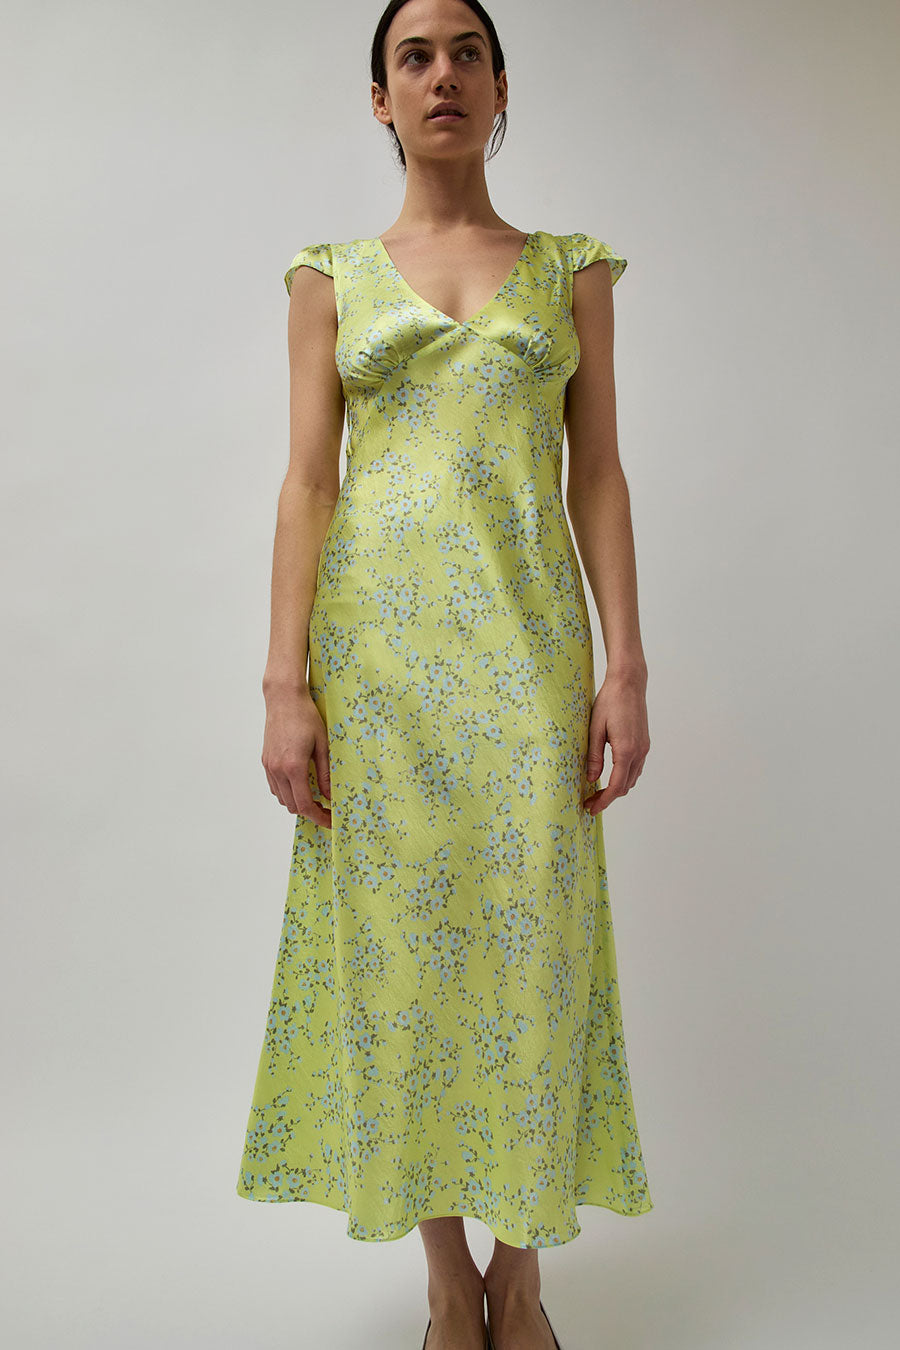 Naya Rea Tiziana Dress in Yellow Floral Print